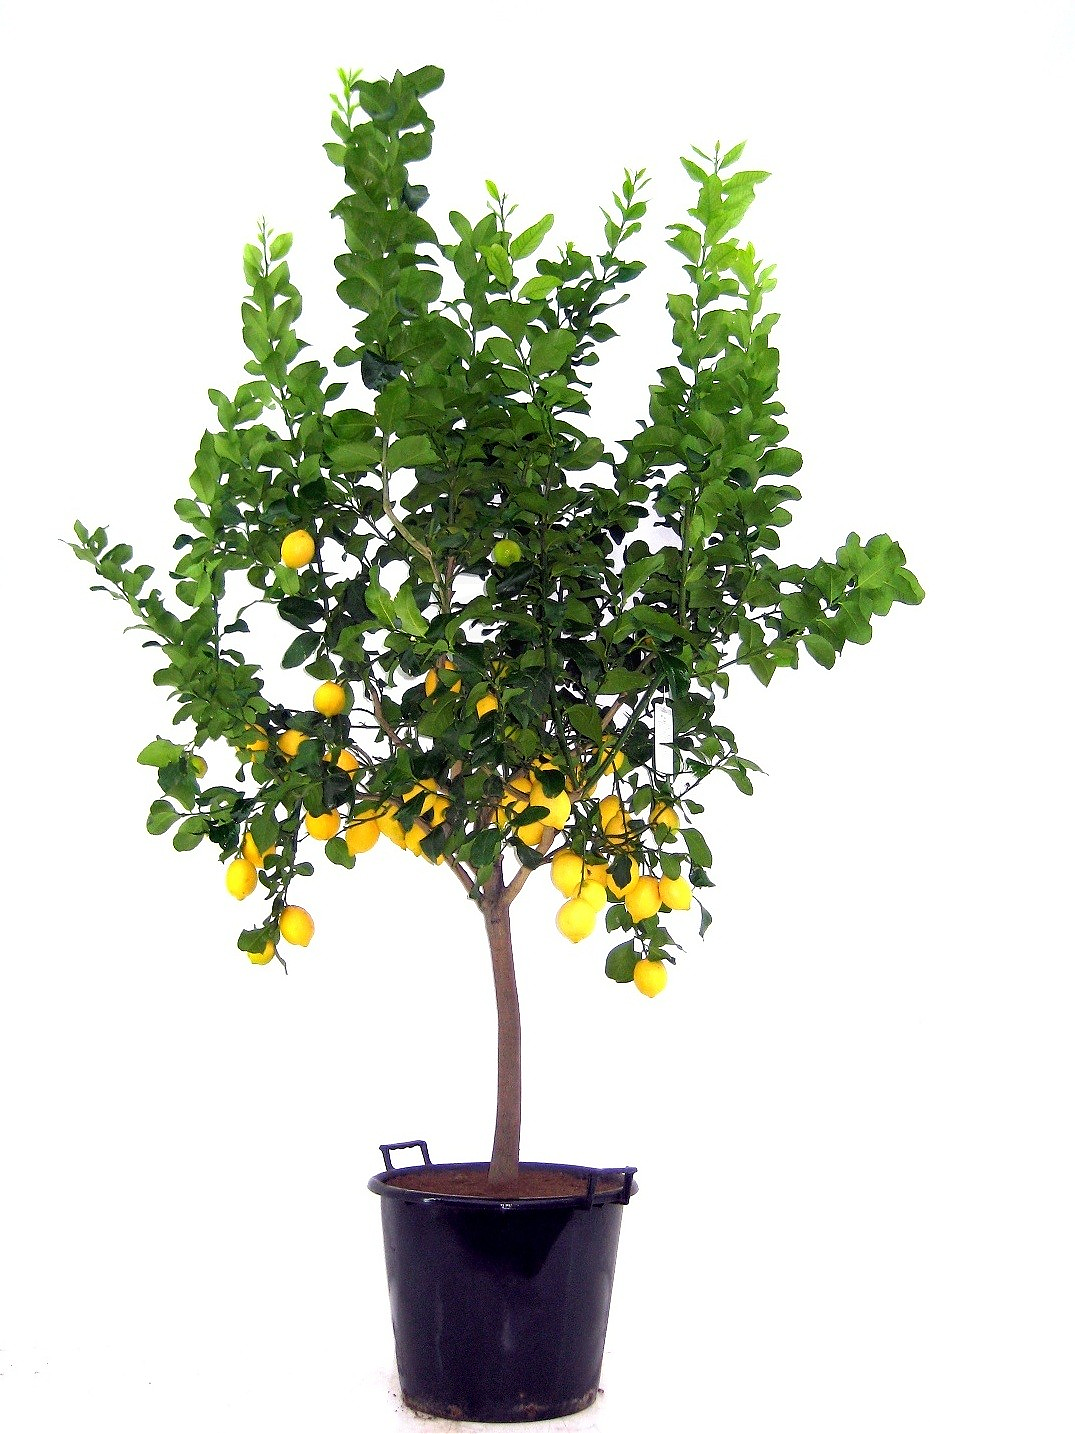 Лимонное дерево - Citrus limon D46 H150